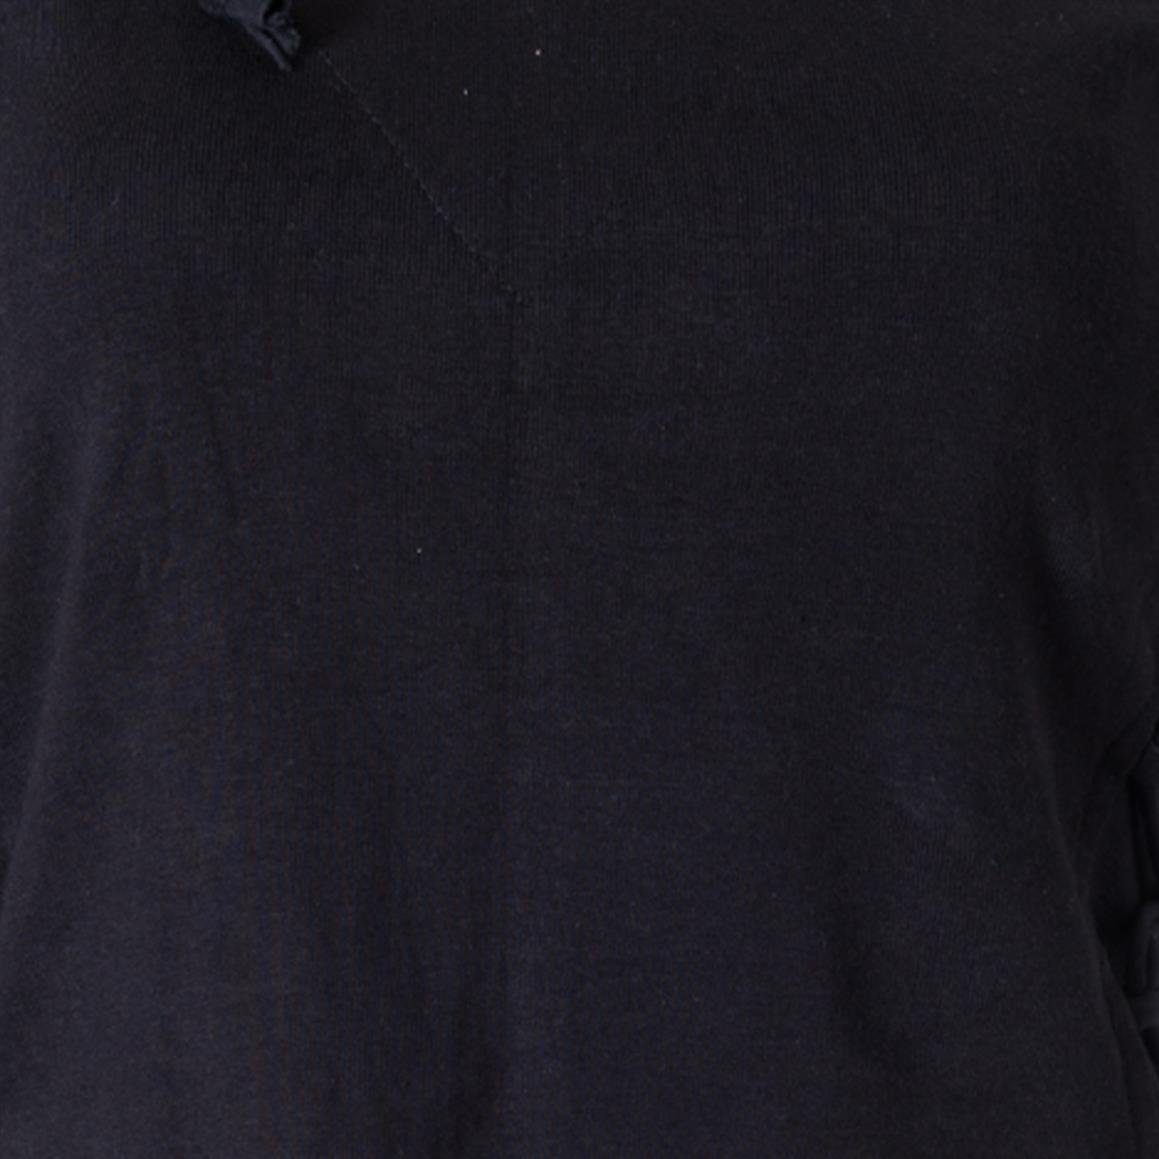 schwarz Vishes Hoody, Ethno, Kapuzenshirt Style Gothik Zipfelkapuze Elfenshirt zum Schnüren und Bändern